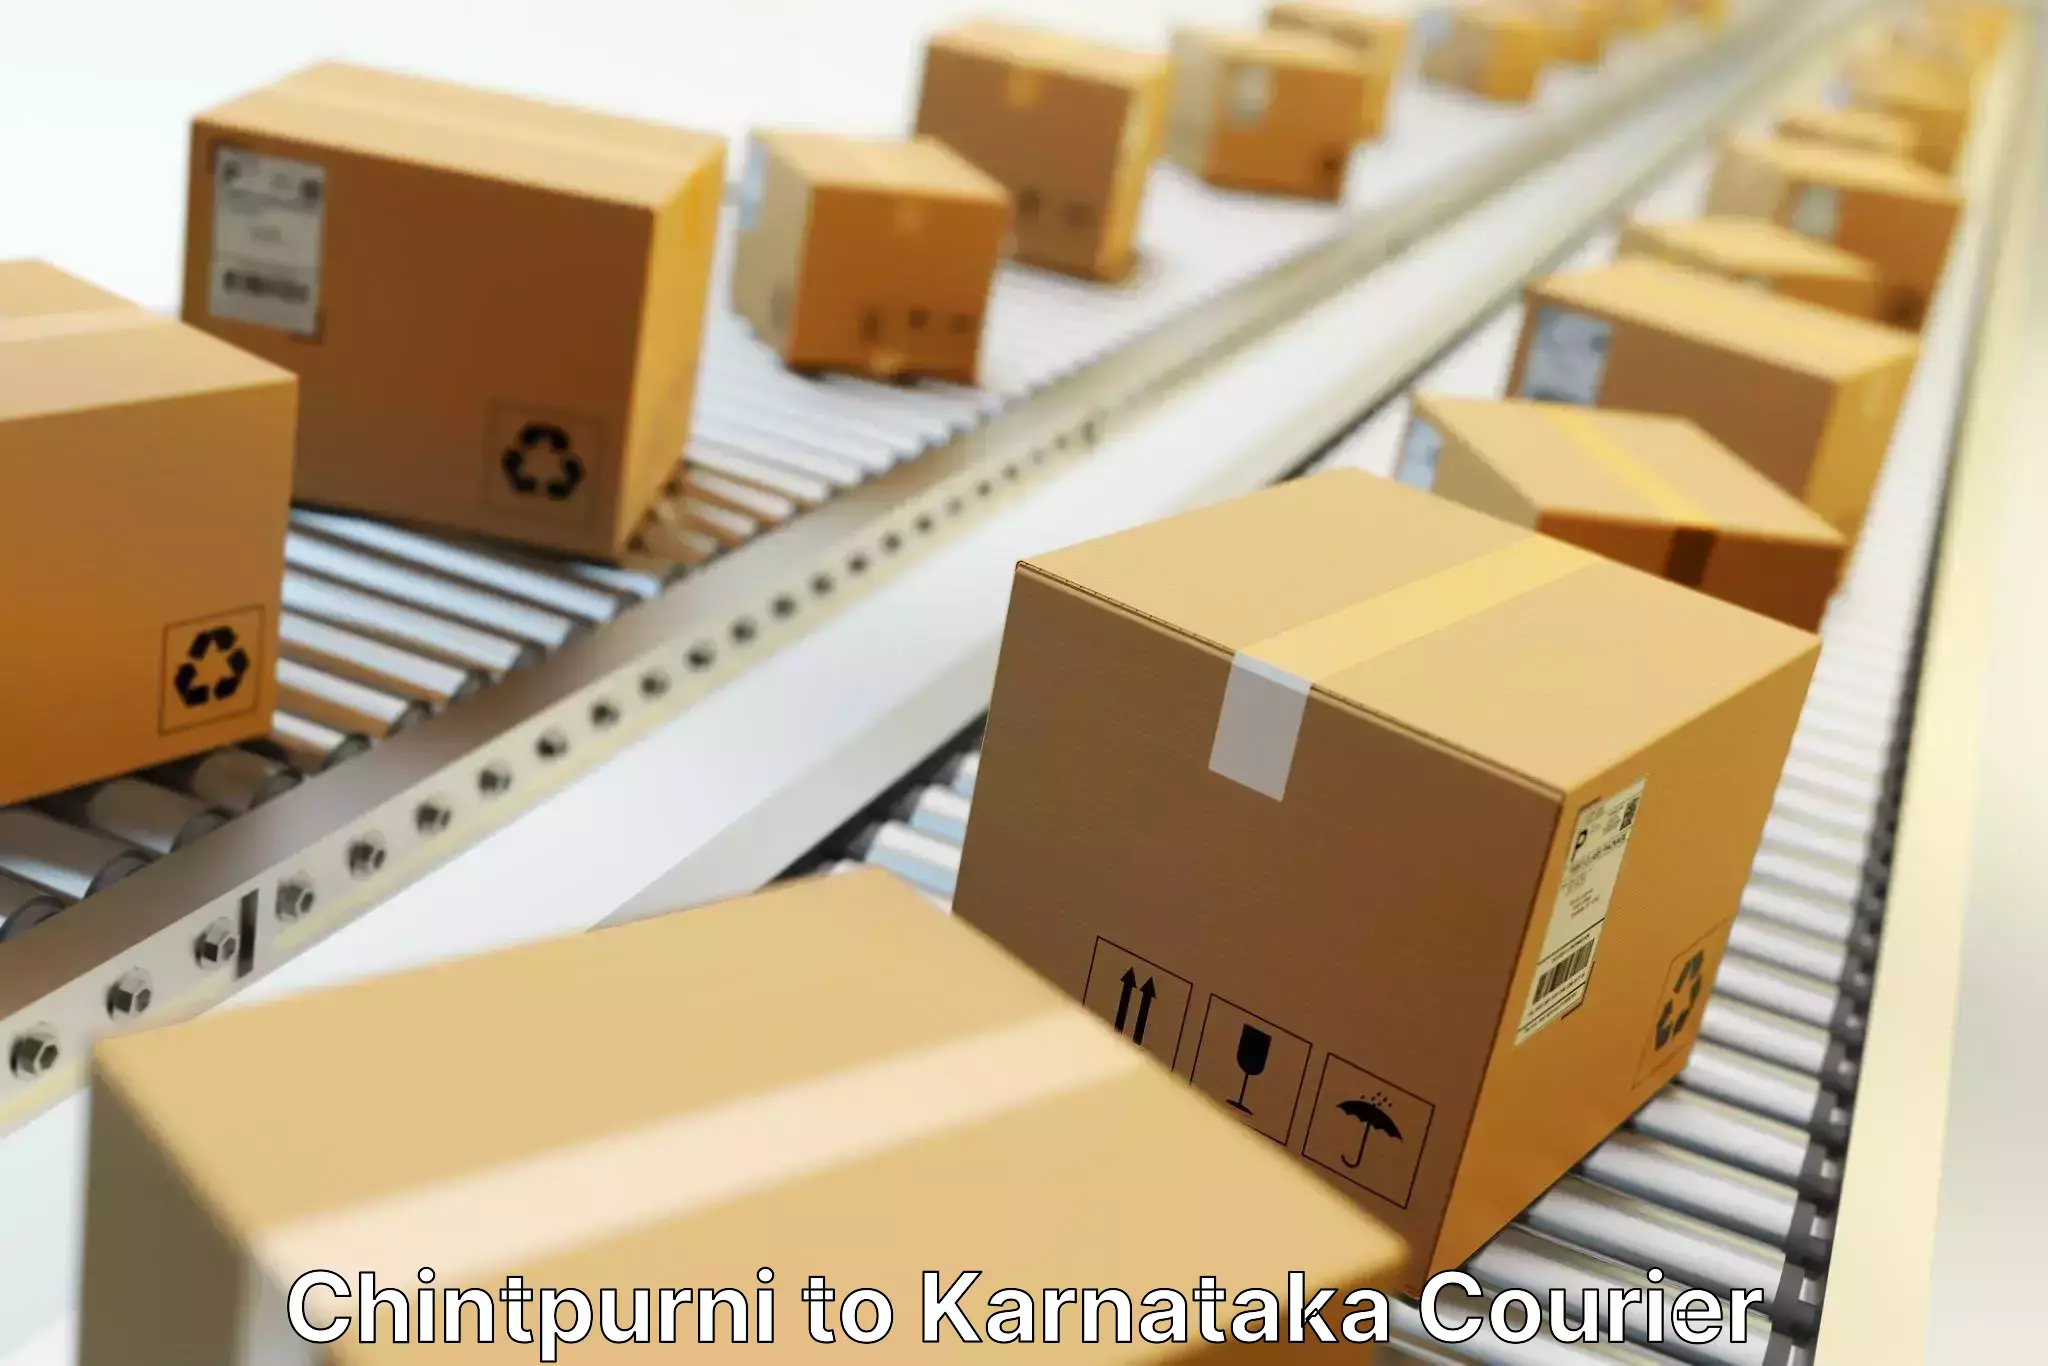 Same-day delivery solutions Chintpurni to Karnataka